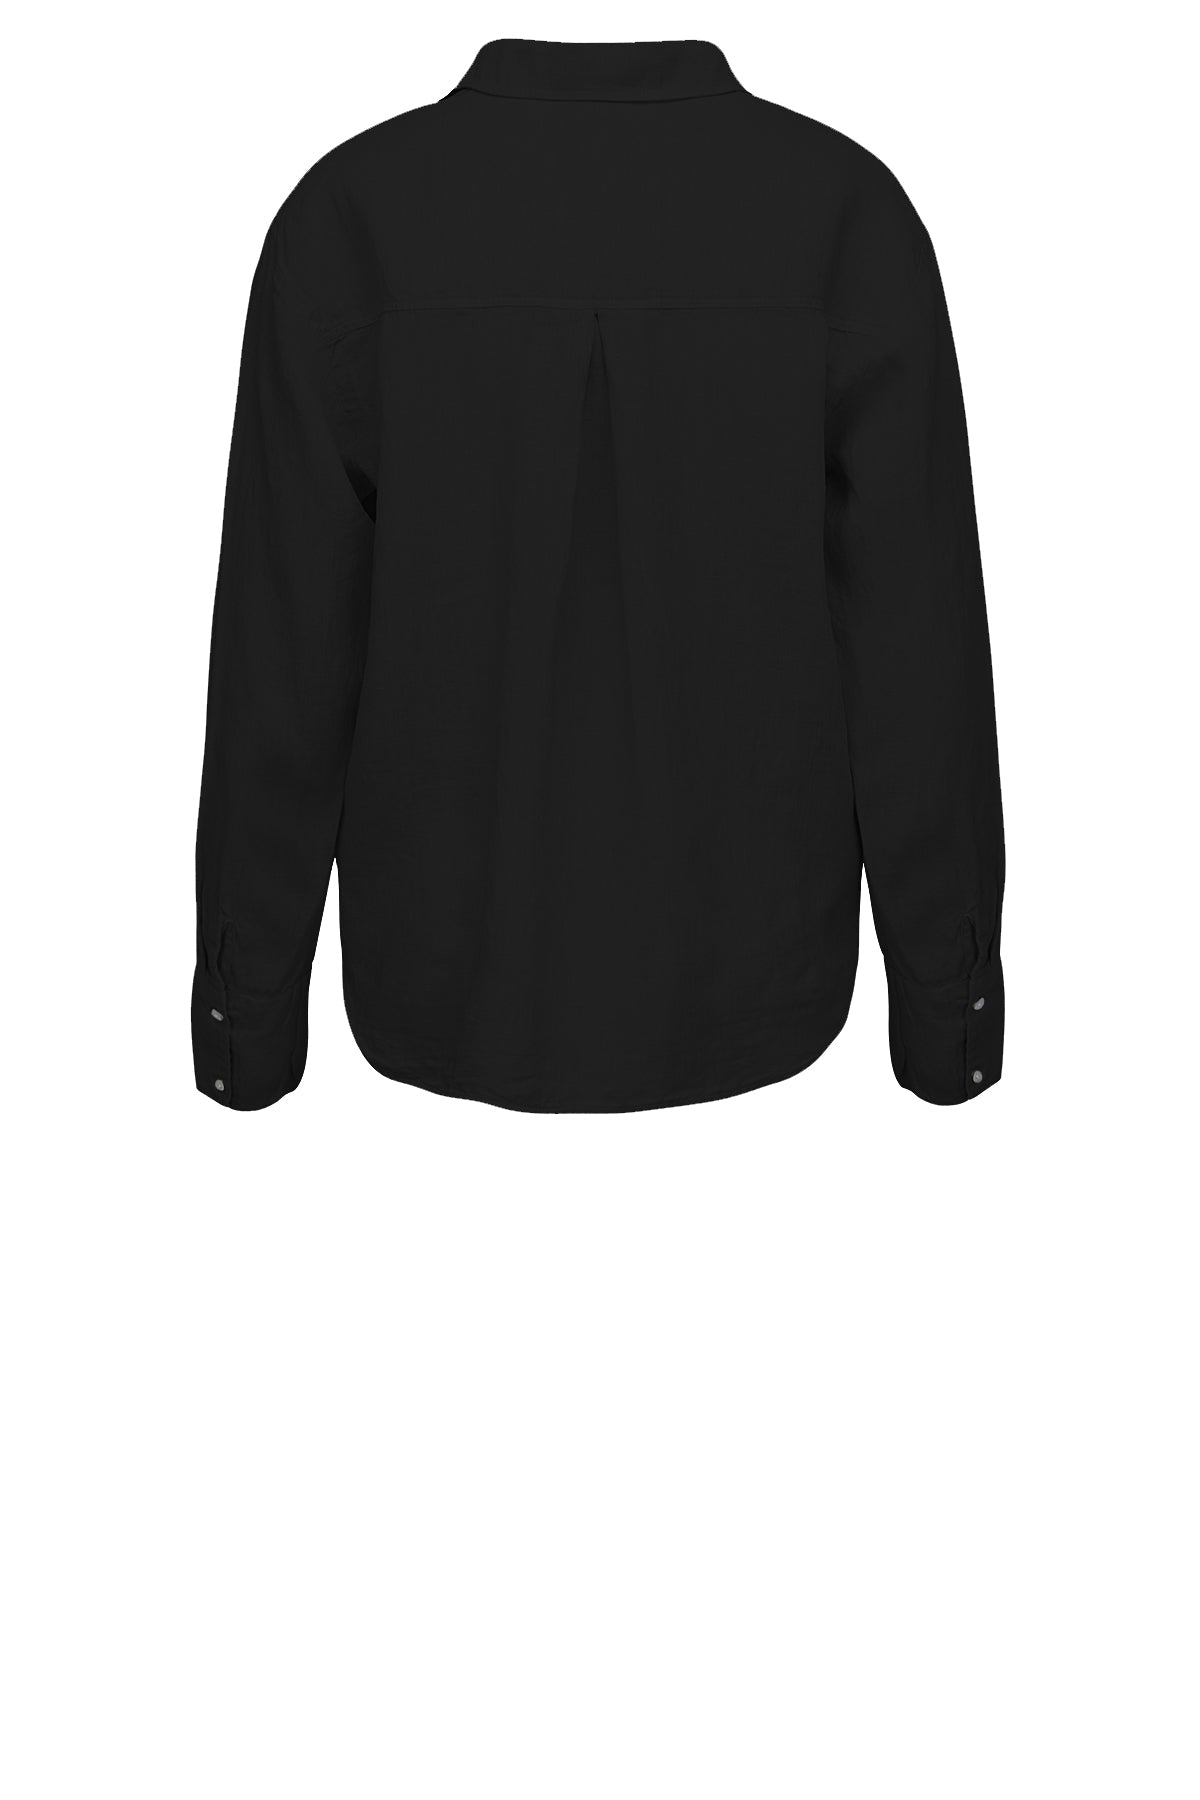 LUXZUZ // ONE TWO Kitt Shirt Shirt 999 Black